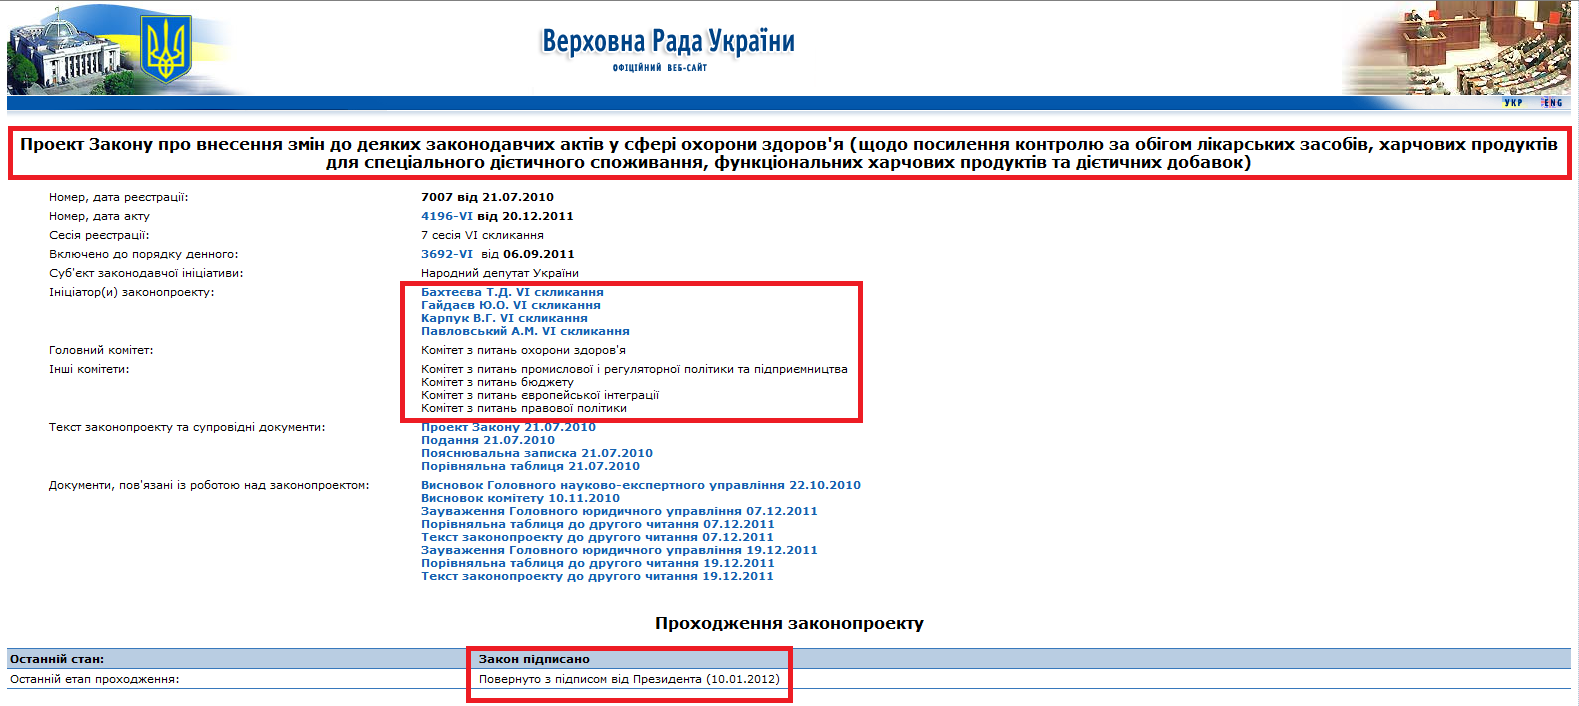 http://w1.c1.rada.gov.ua/pls/zweb_n/webproc4_2?id=&pf3516=7007&skl=7